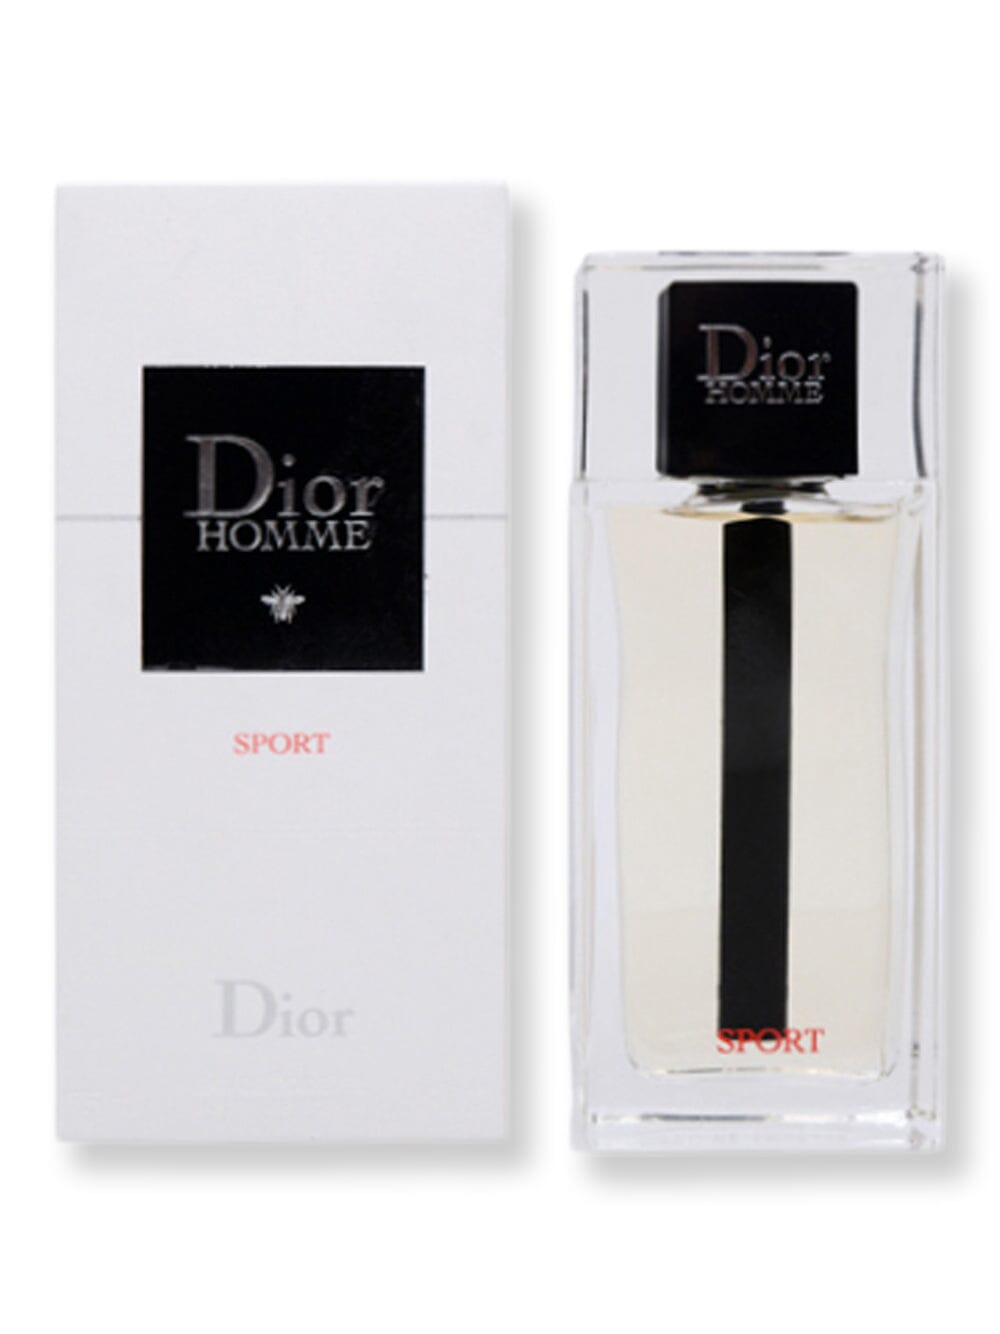 Dior Dior Homme Sport EDT Spray 2.5 oz75 ml Perfume 